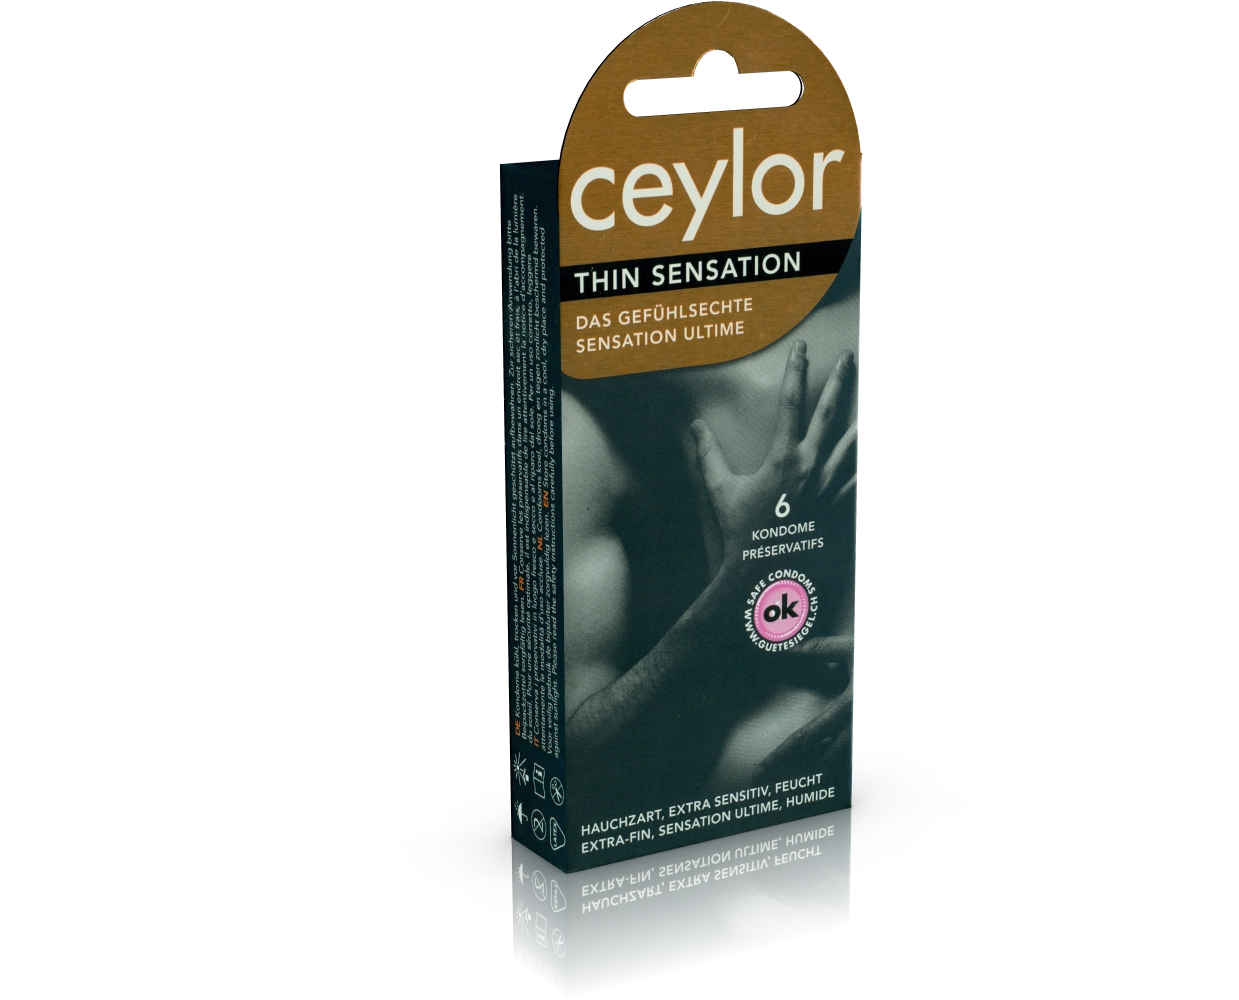 Ceylor «Thin Sensation» 6 extra thin condoms, hygienically sealed in condom pods